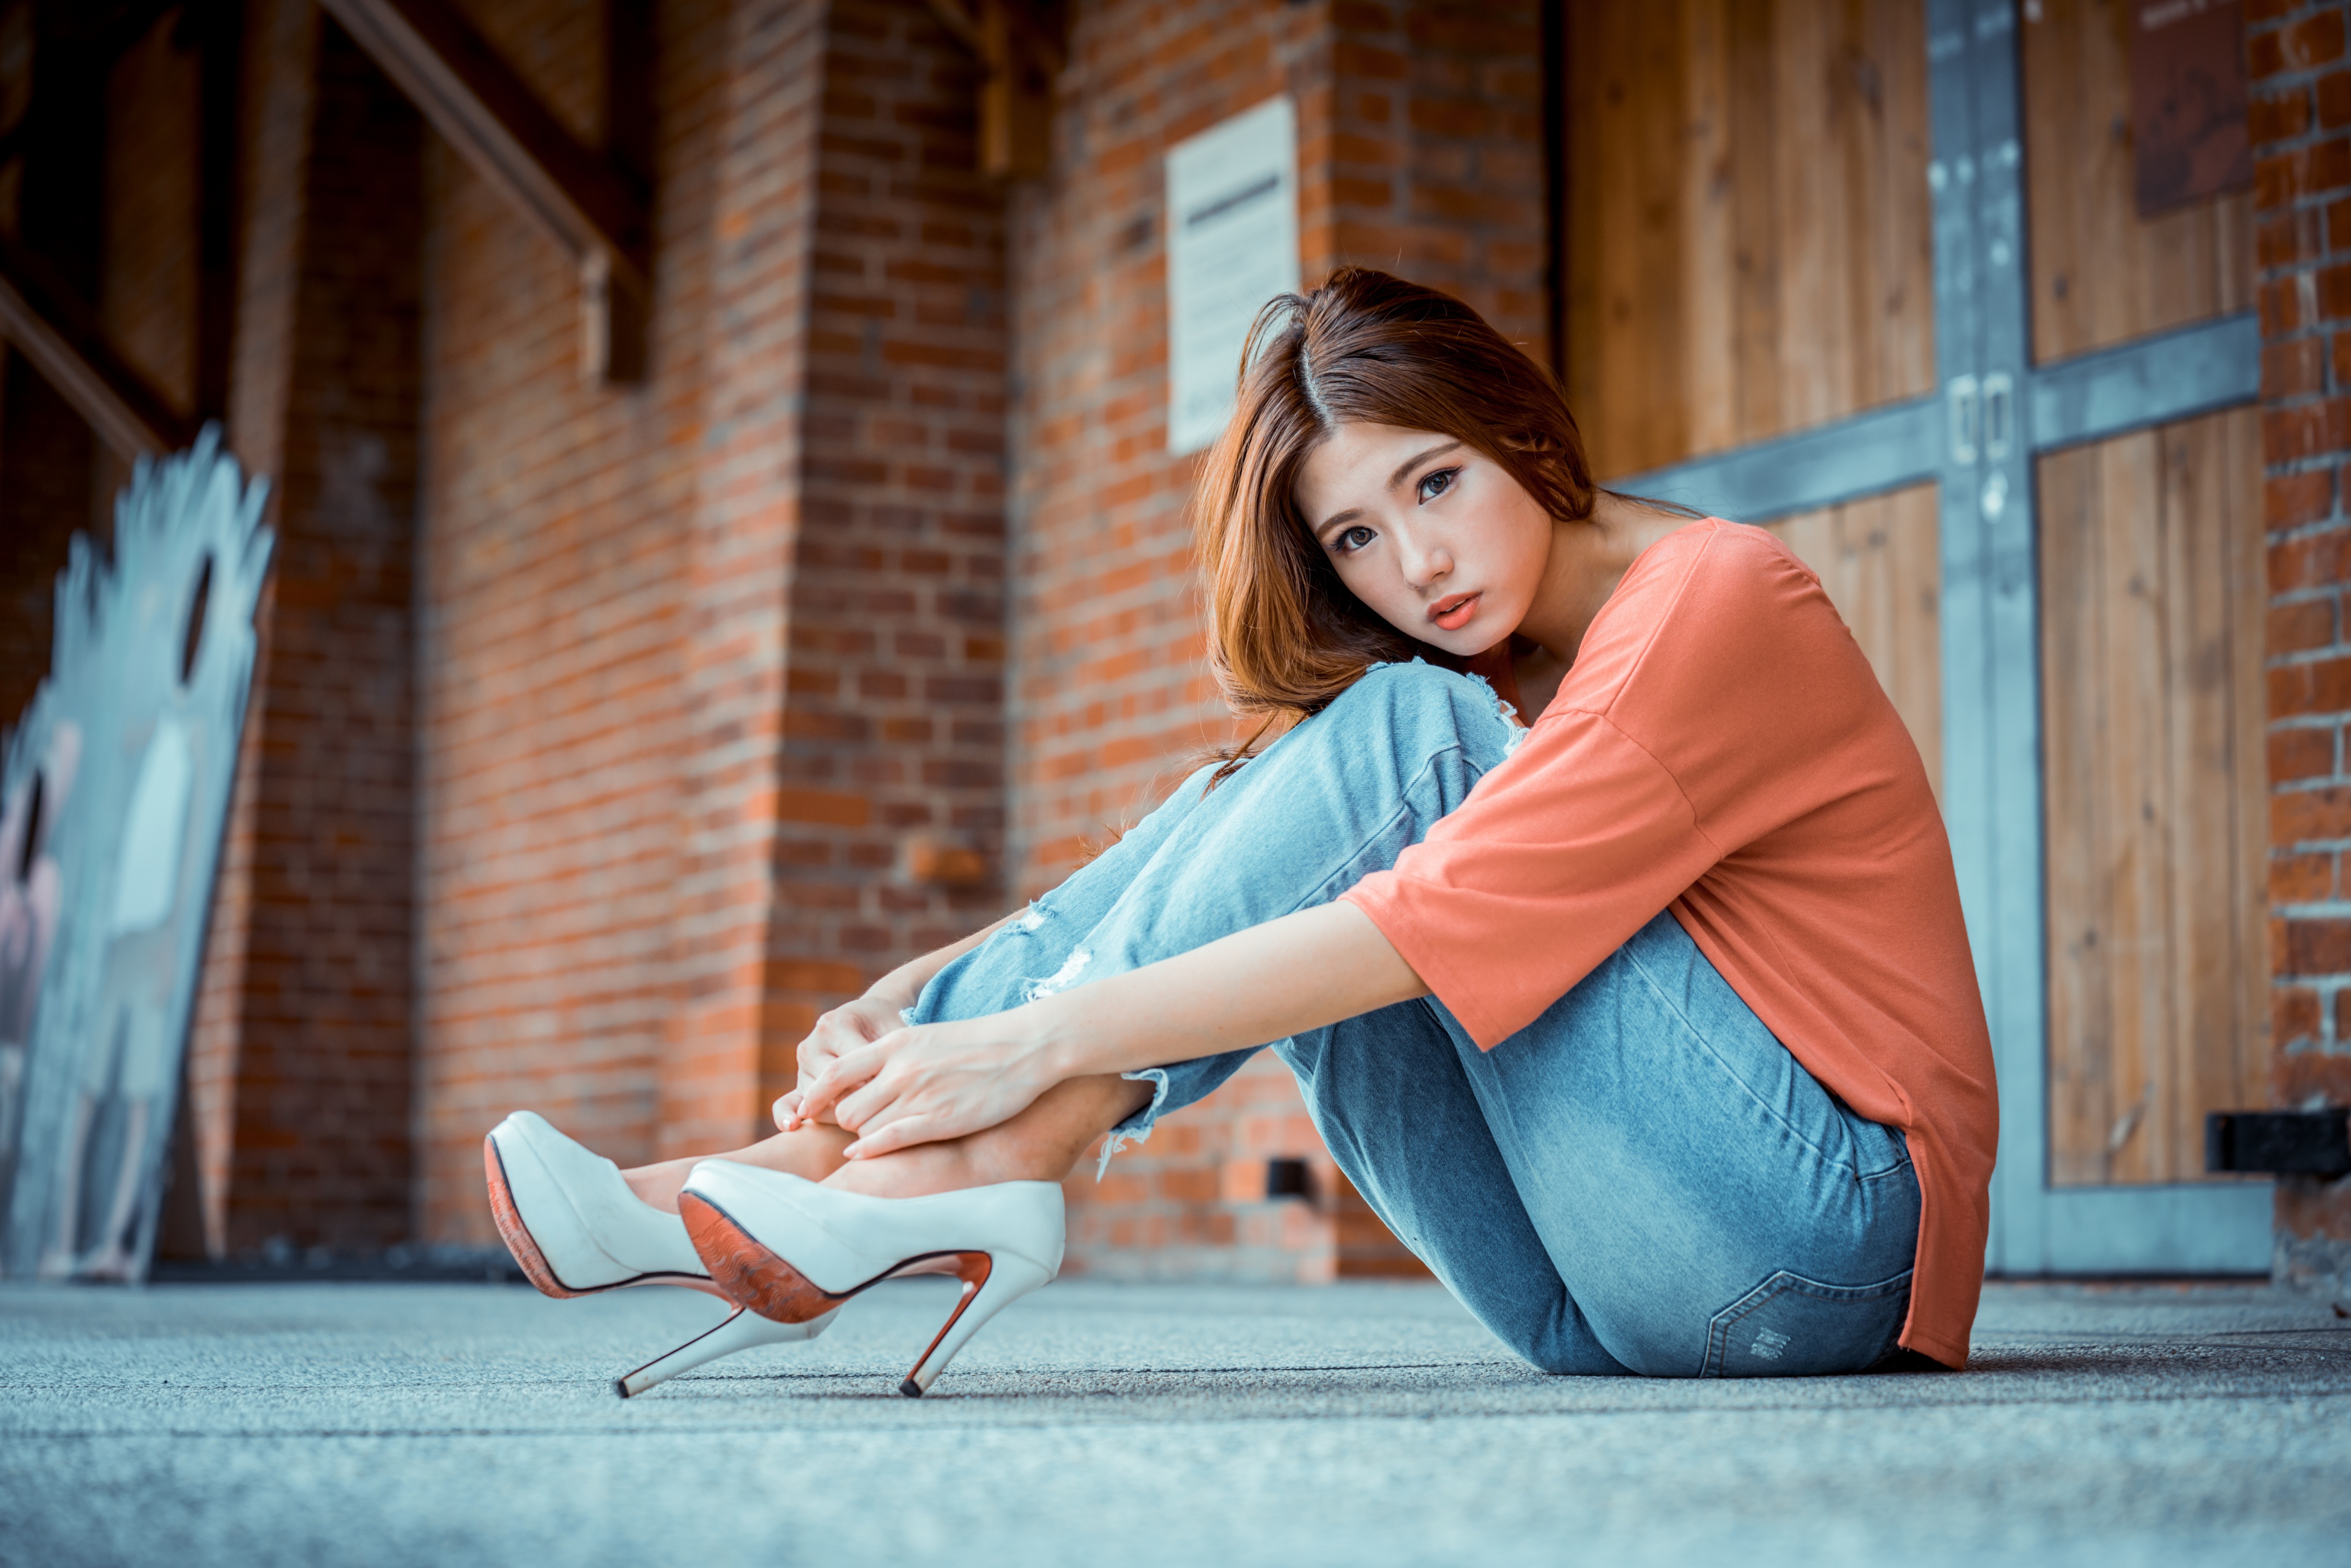 Model Red Lipstick Asian Orange Tops Jeans High Heels Sitting On The Floor Women Outdoors 4500x3002